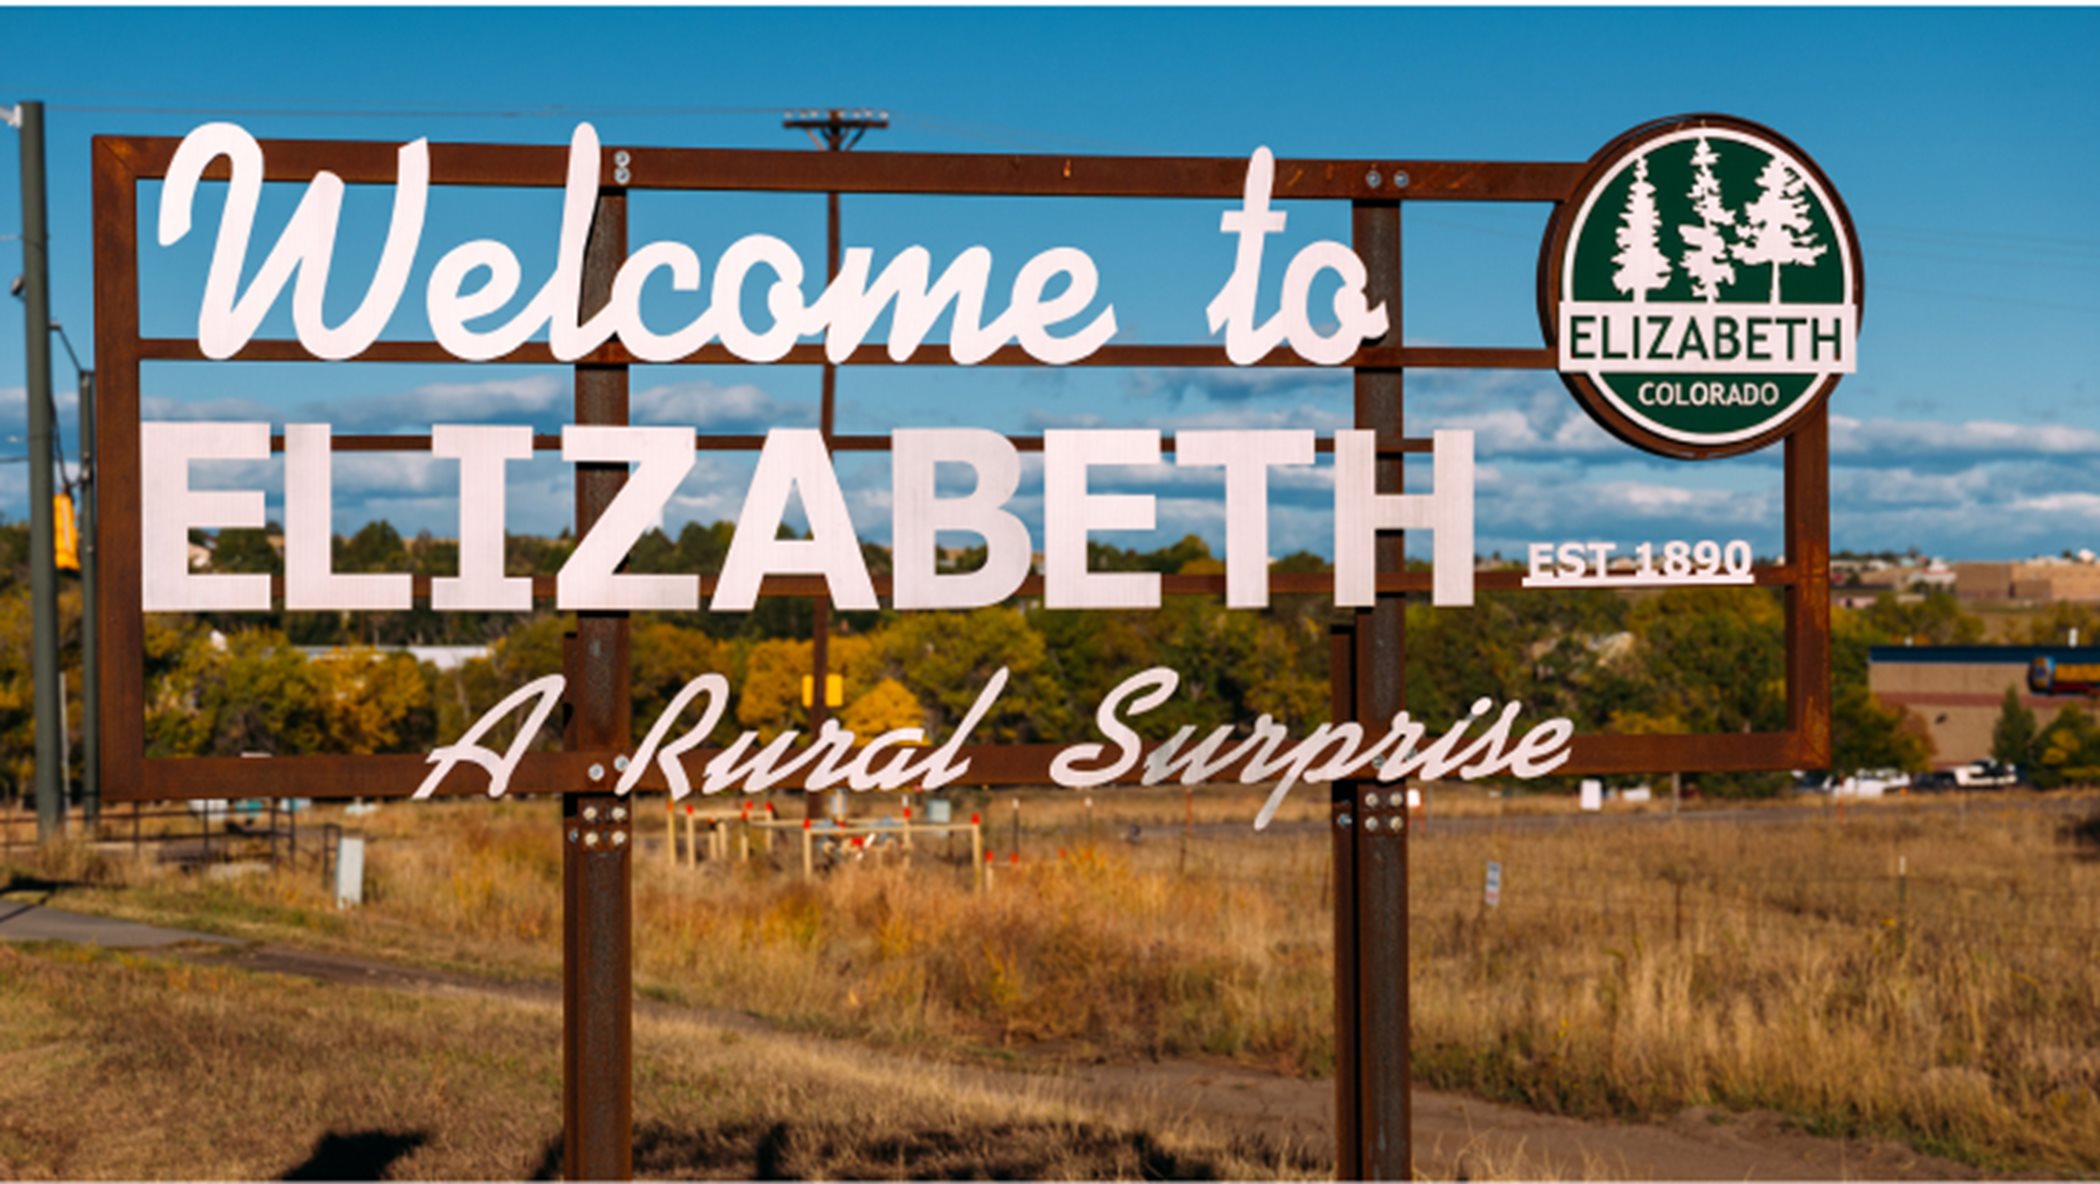 Elizabeth city sign